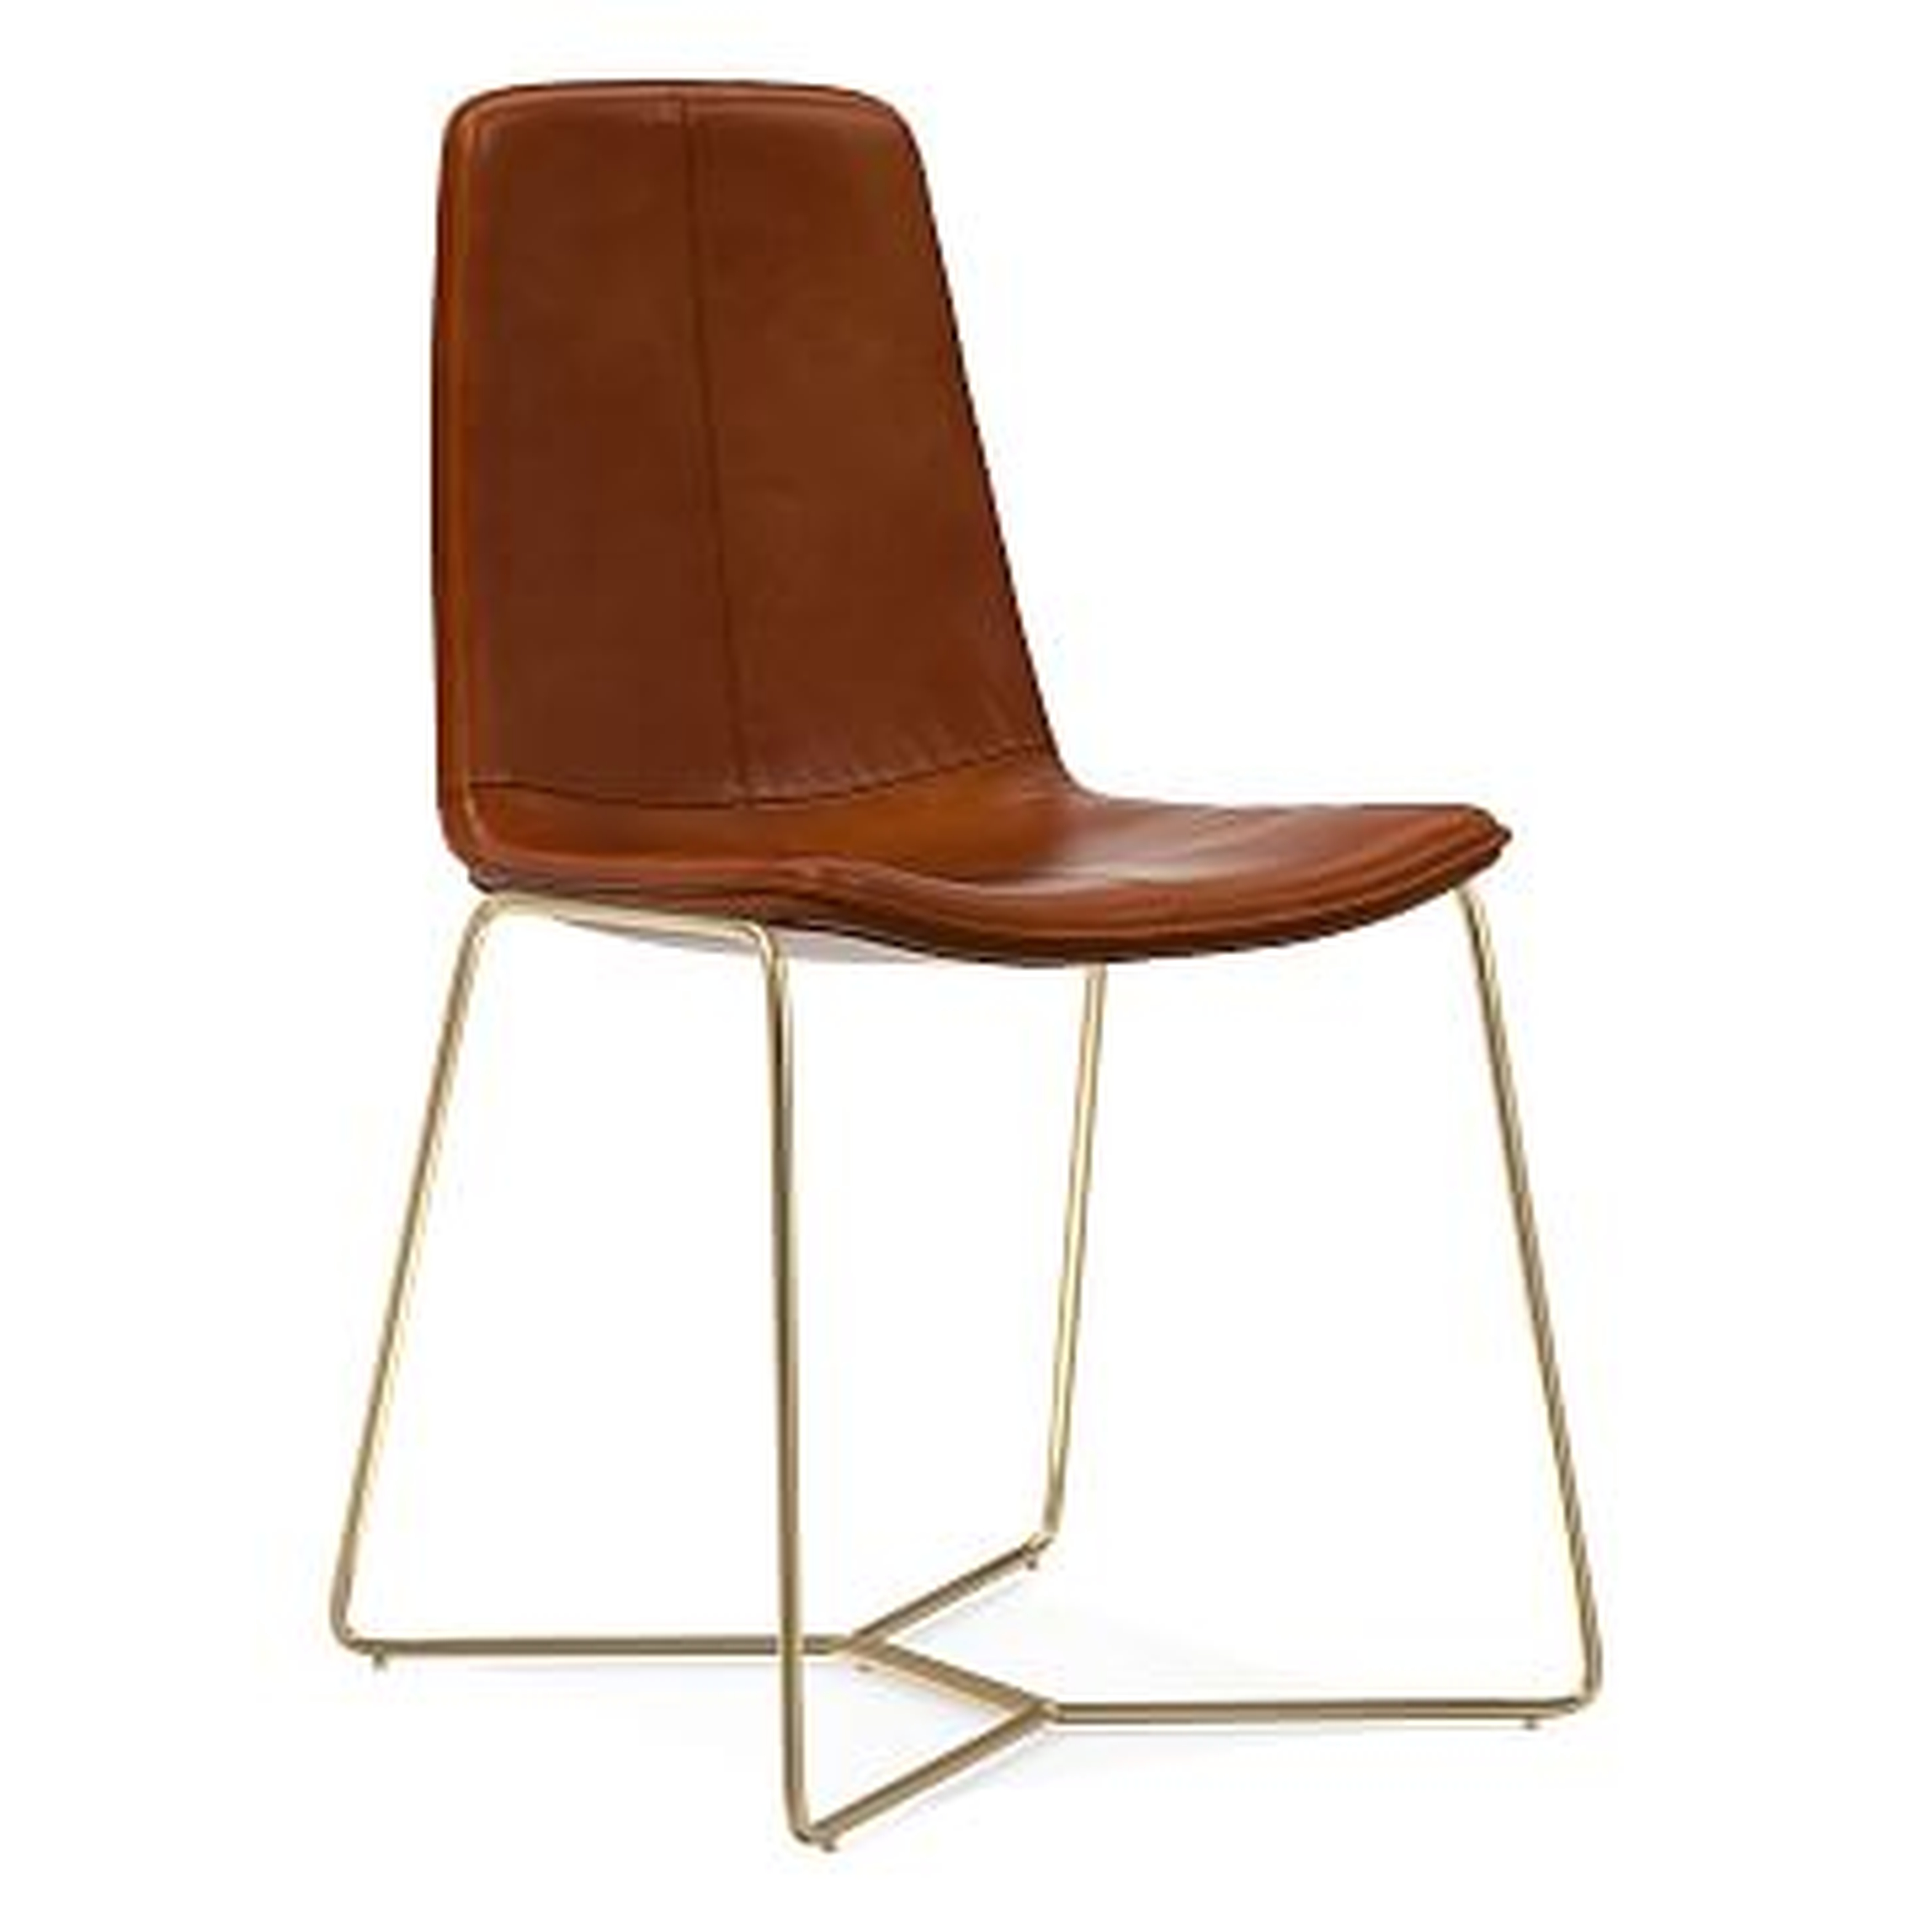 Slope Upholstered Dining Chair, Saddle Leather, Nut, Antique Brass - West Elm